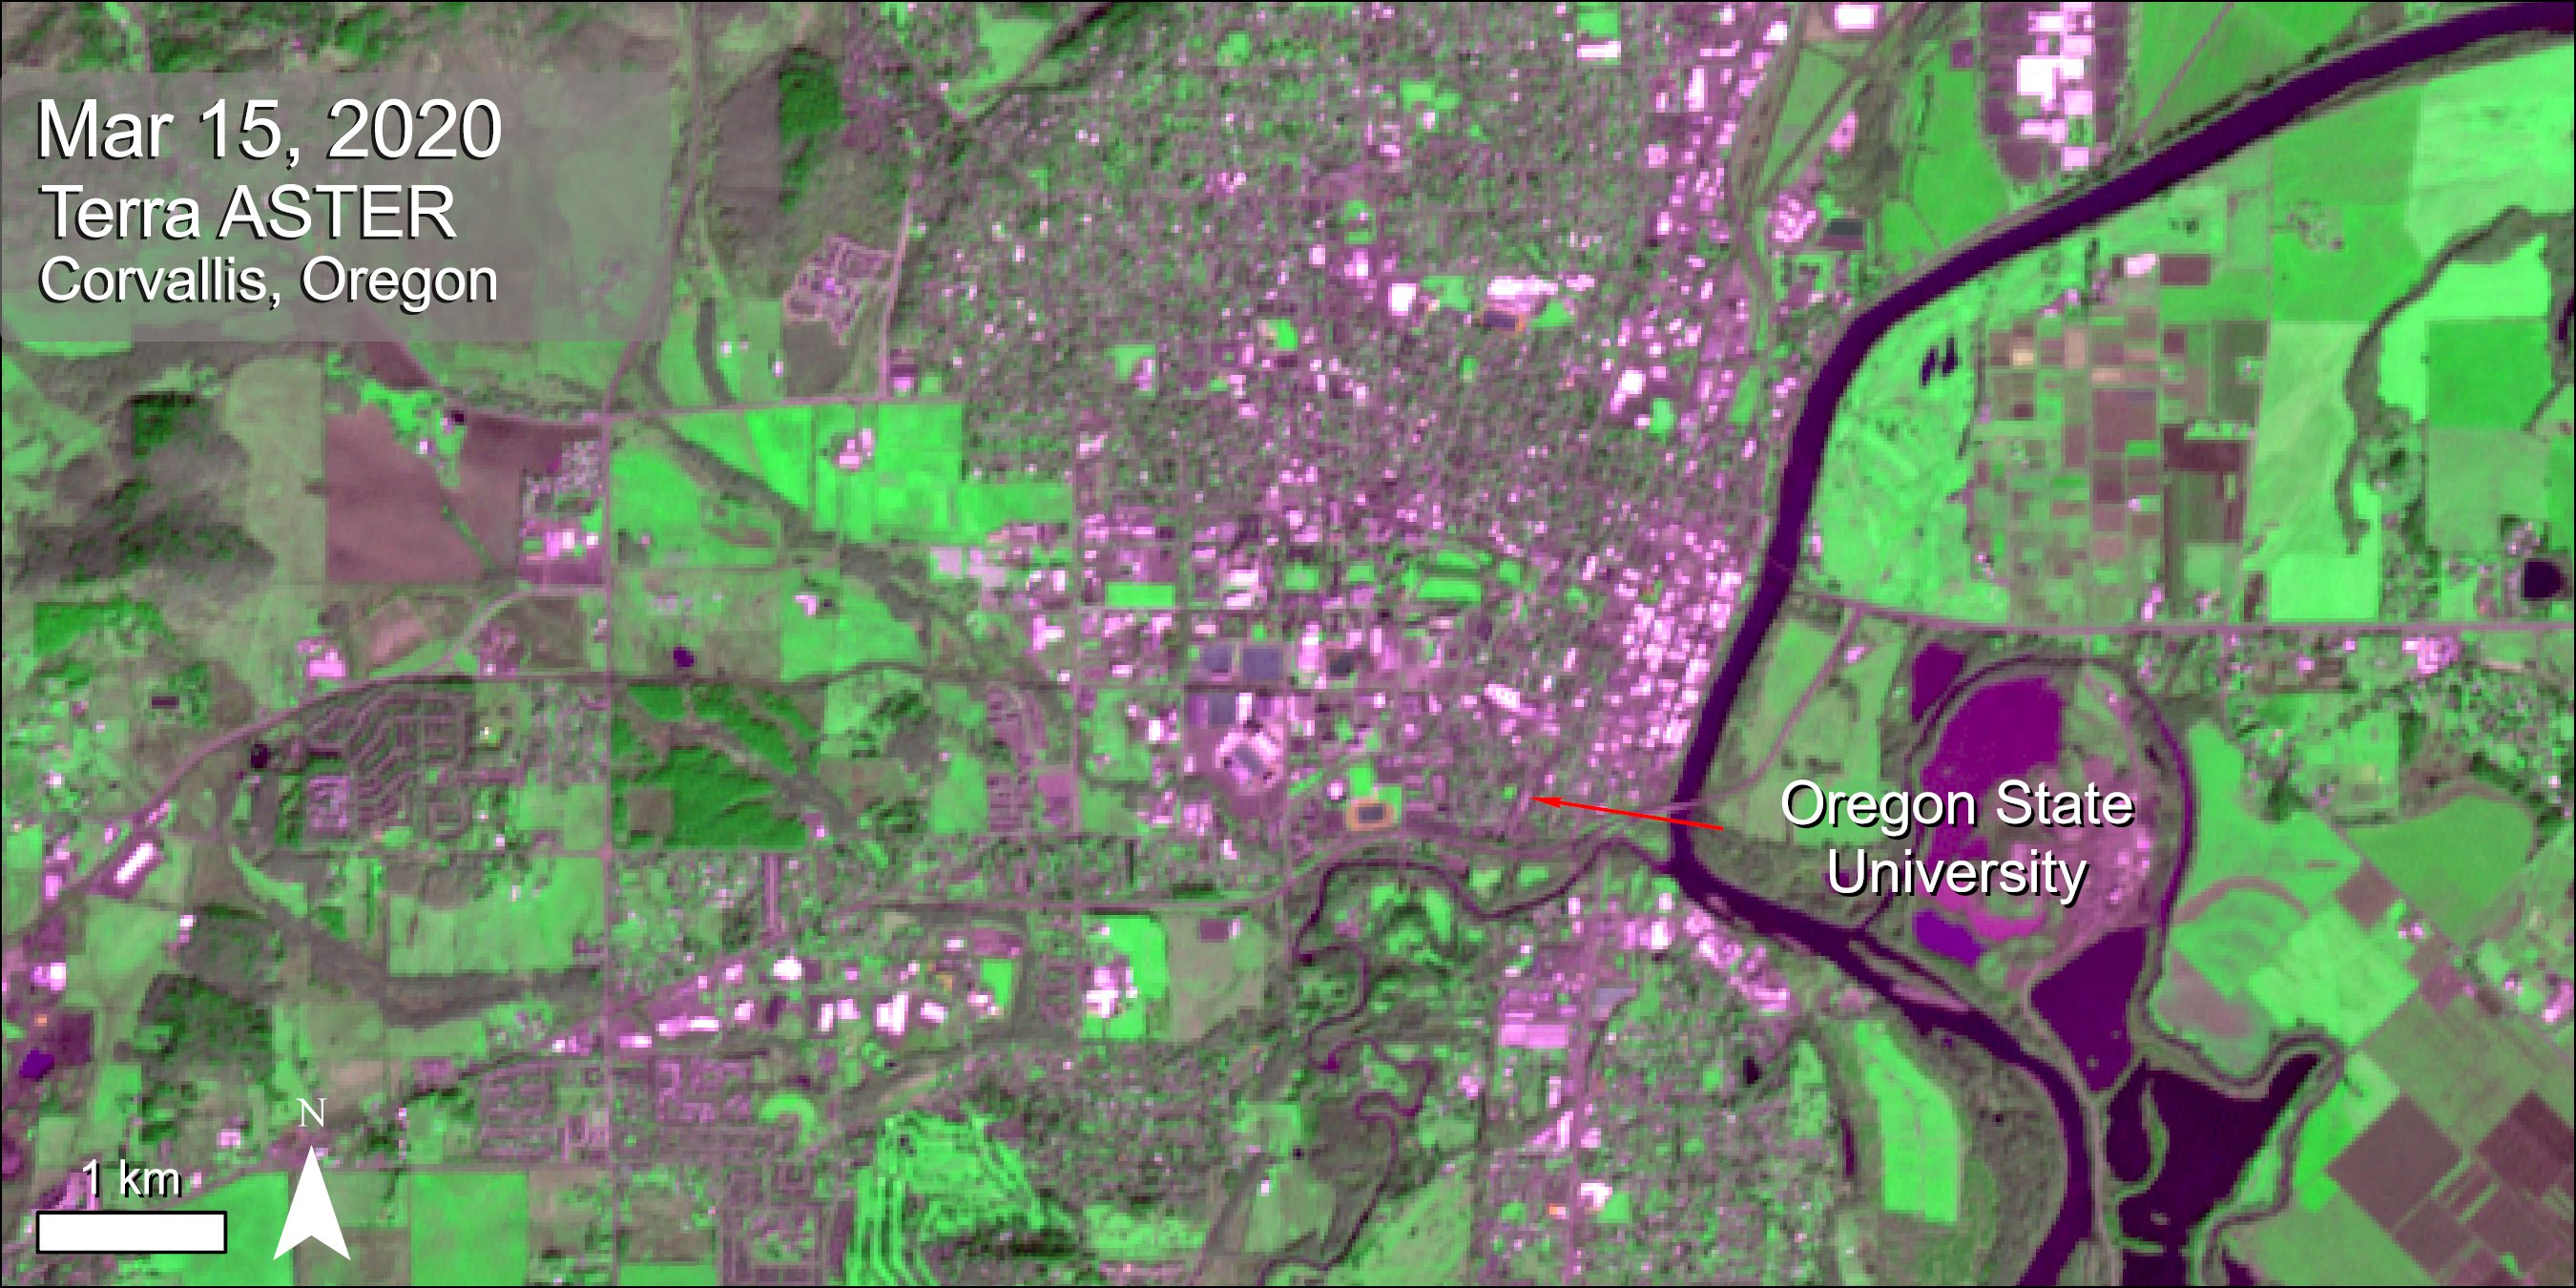 Terra ASTER imagery over Corvallis, Oregon.